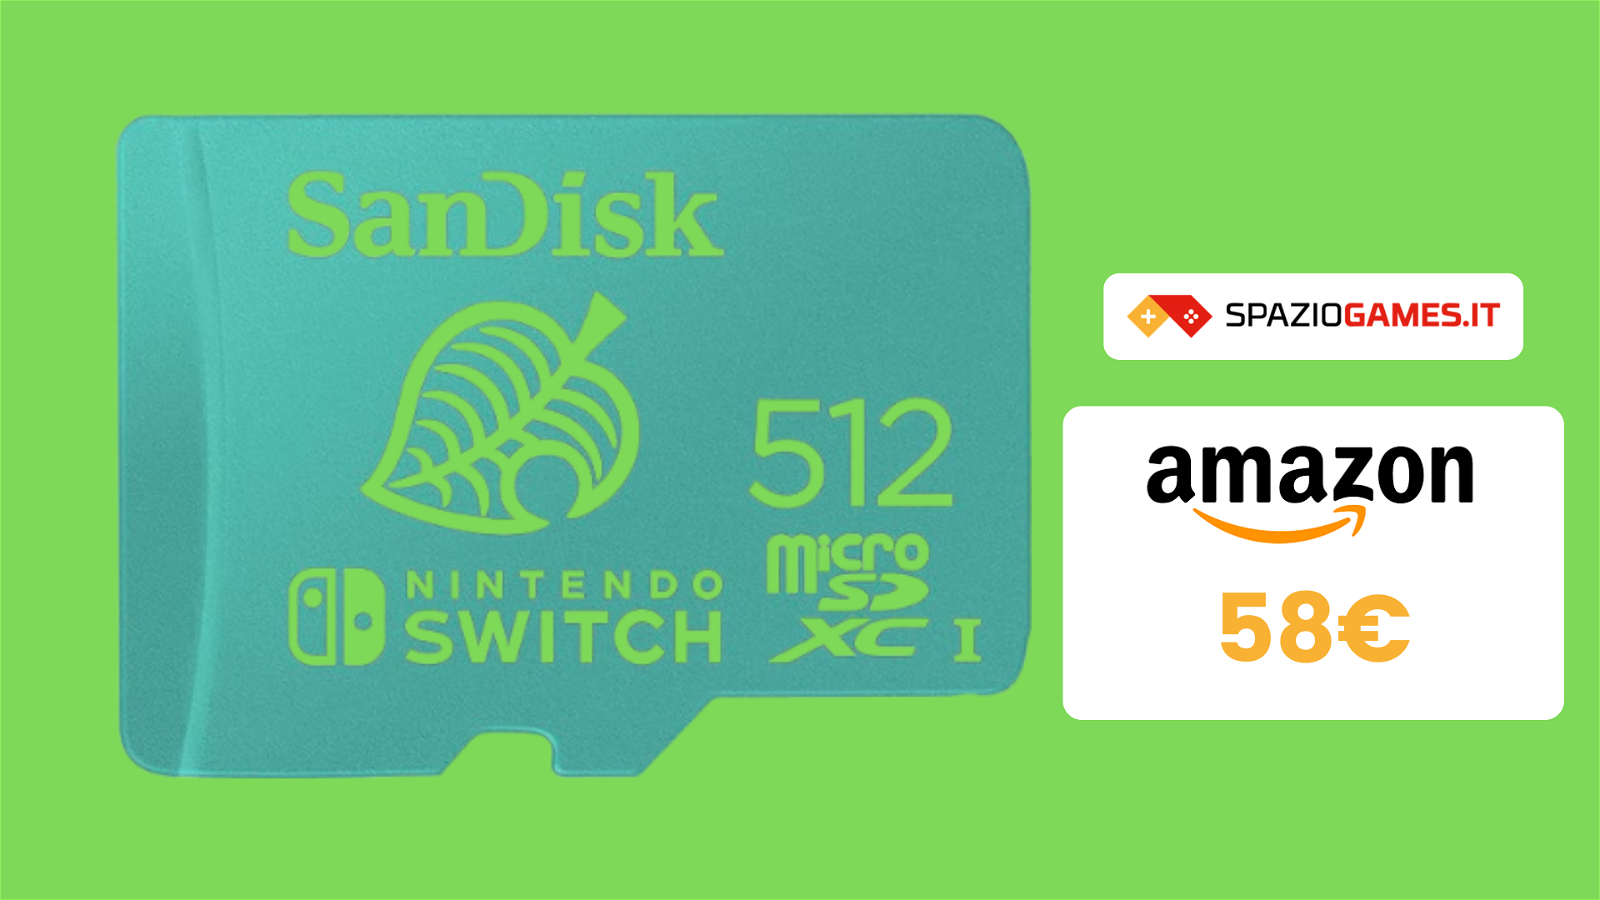 MicroSDXC SanDisk da 512GB per Nintendo Switch a 58€!